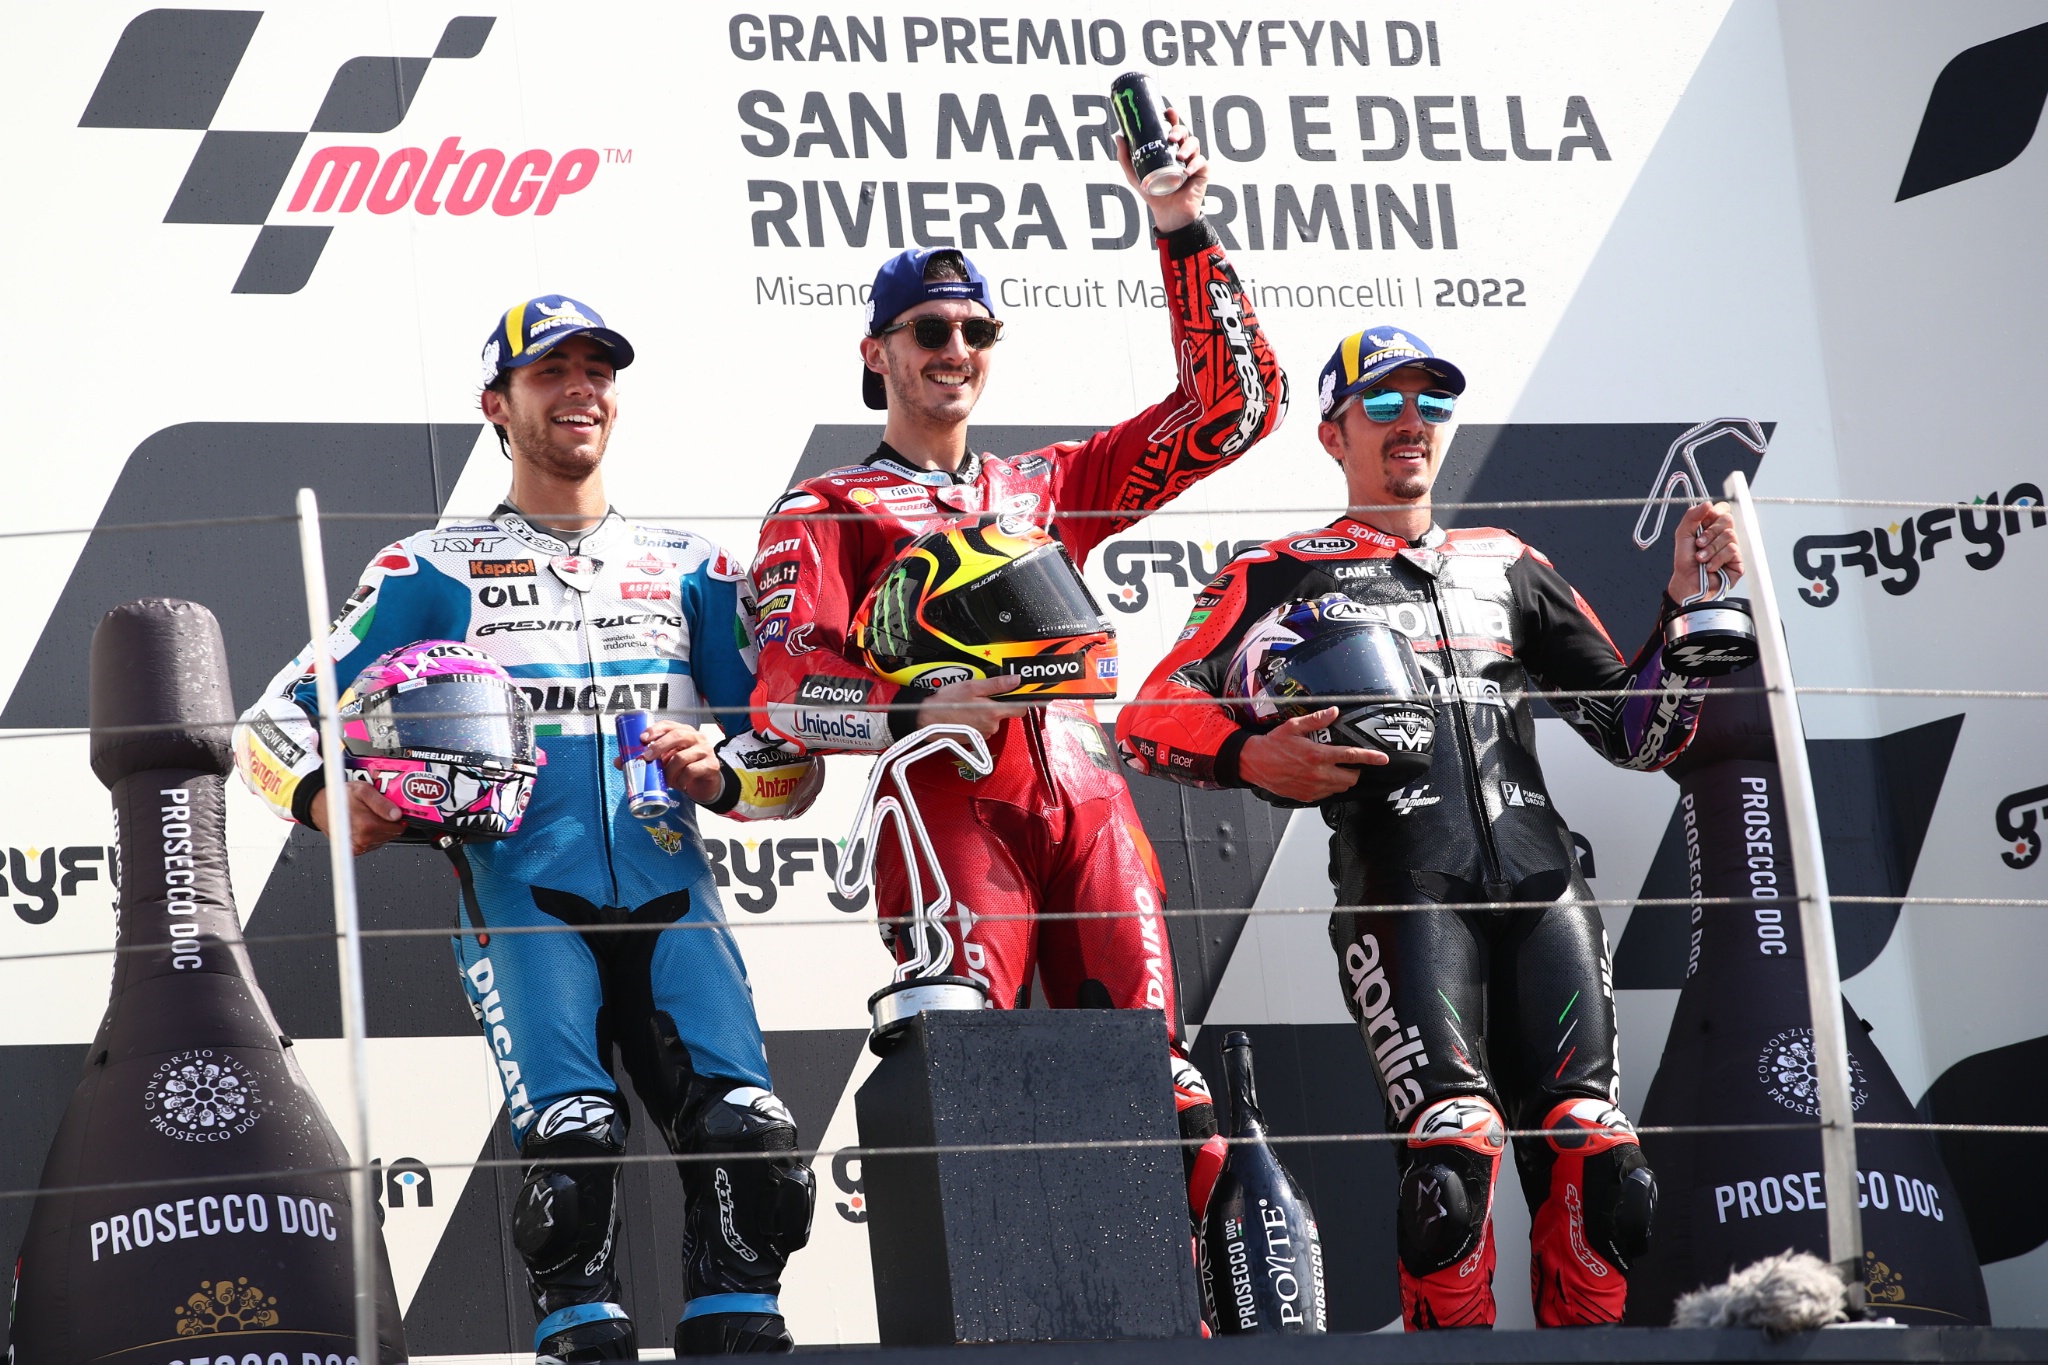 Francesco Bagnaia, Enea Bastianini, Maverick Vinales podium, MotoGP race, San Marino MotoGP, 4 September